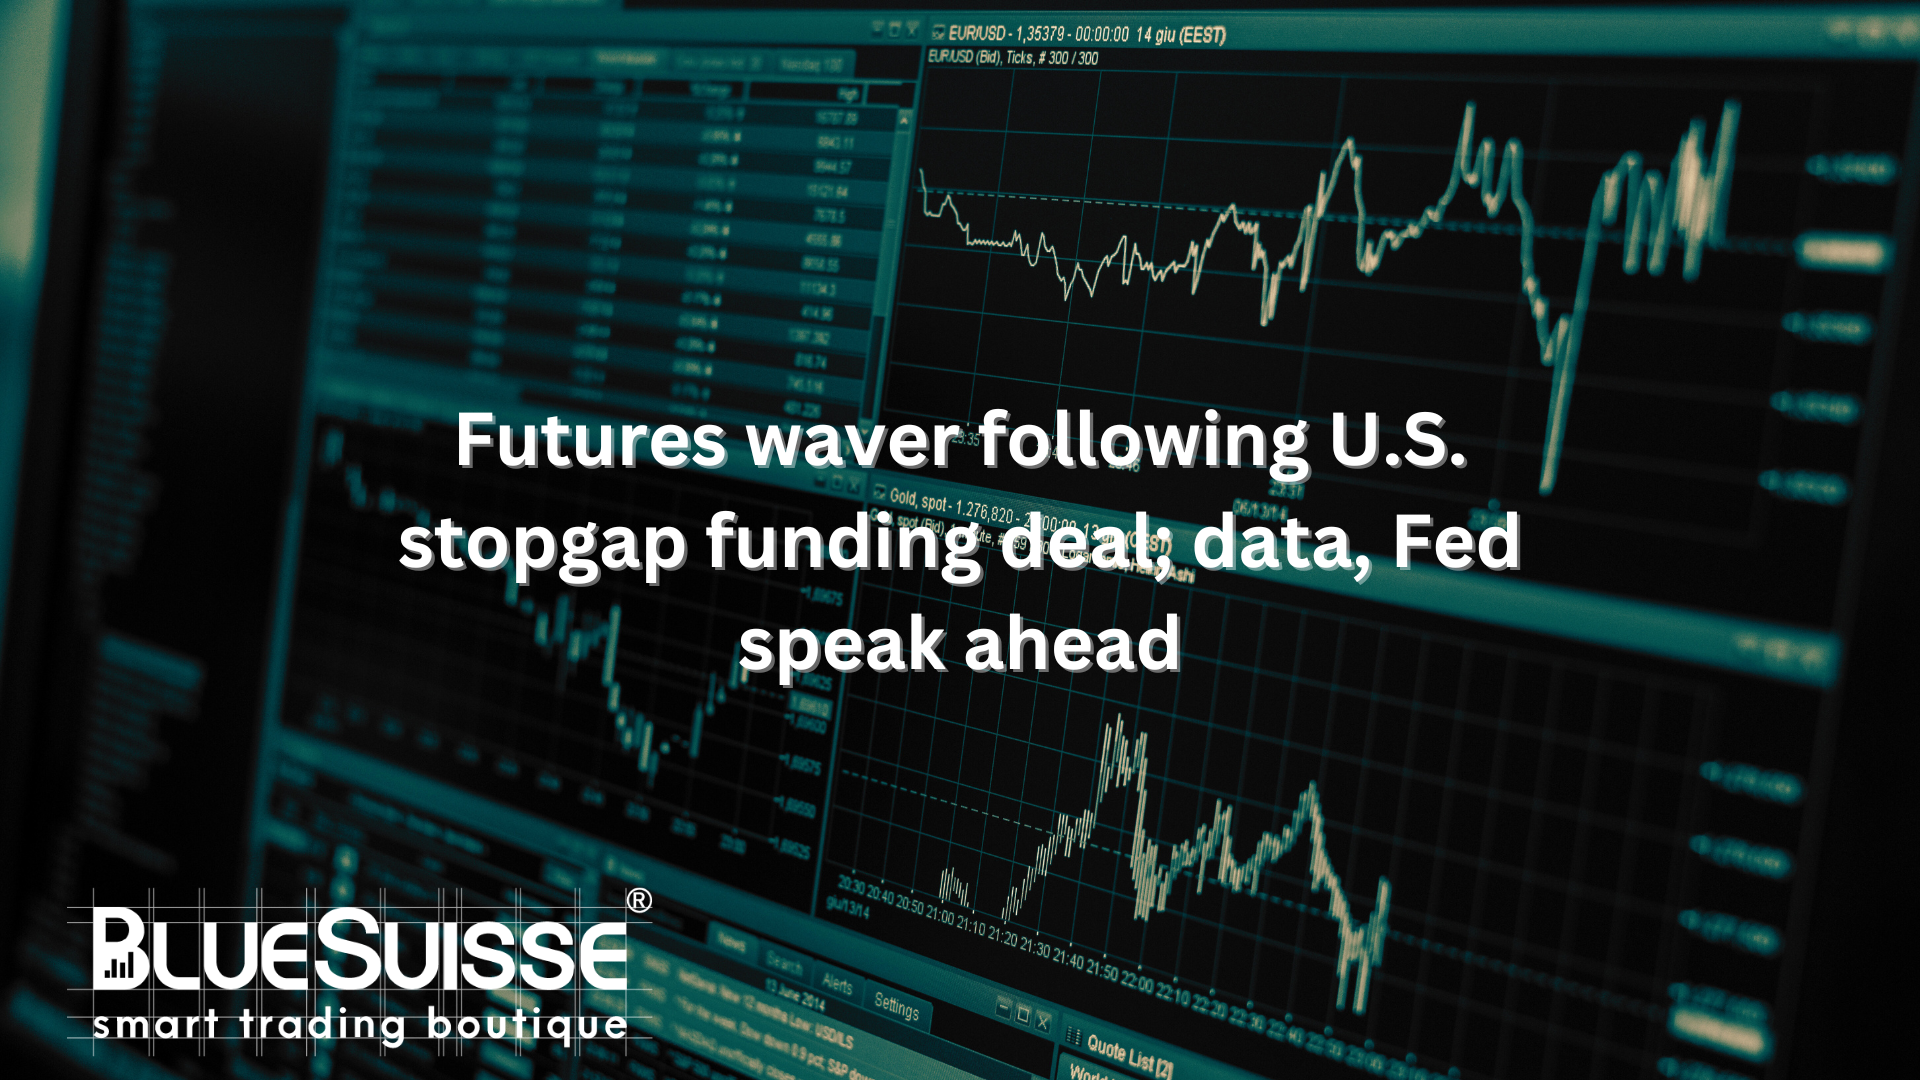 Futures waver following U.S. stopgap funding deal; data, Fed speak ahead